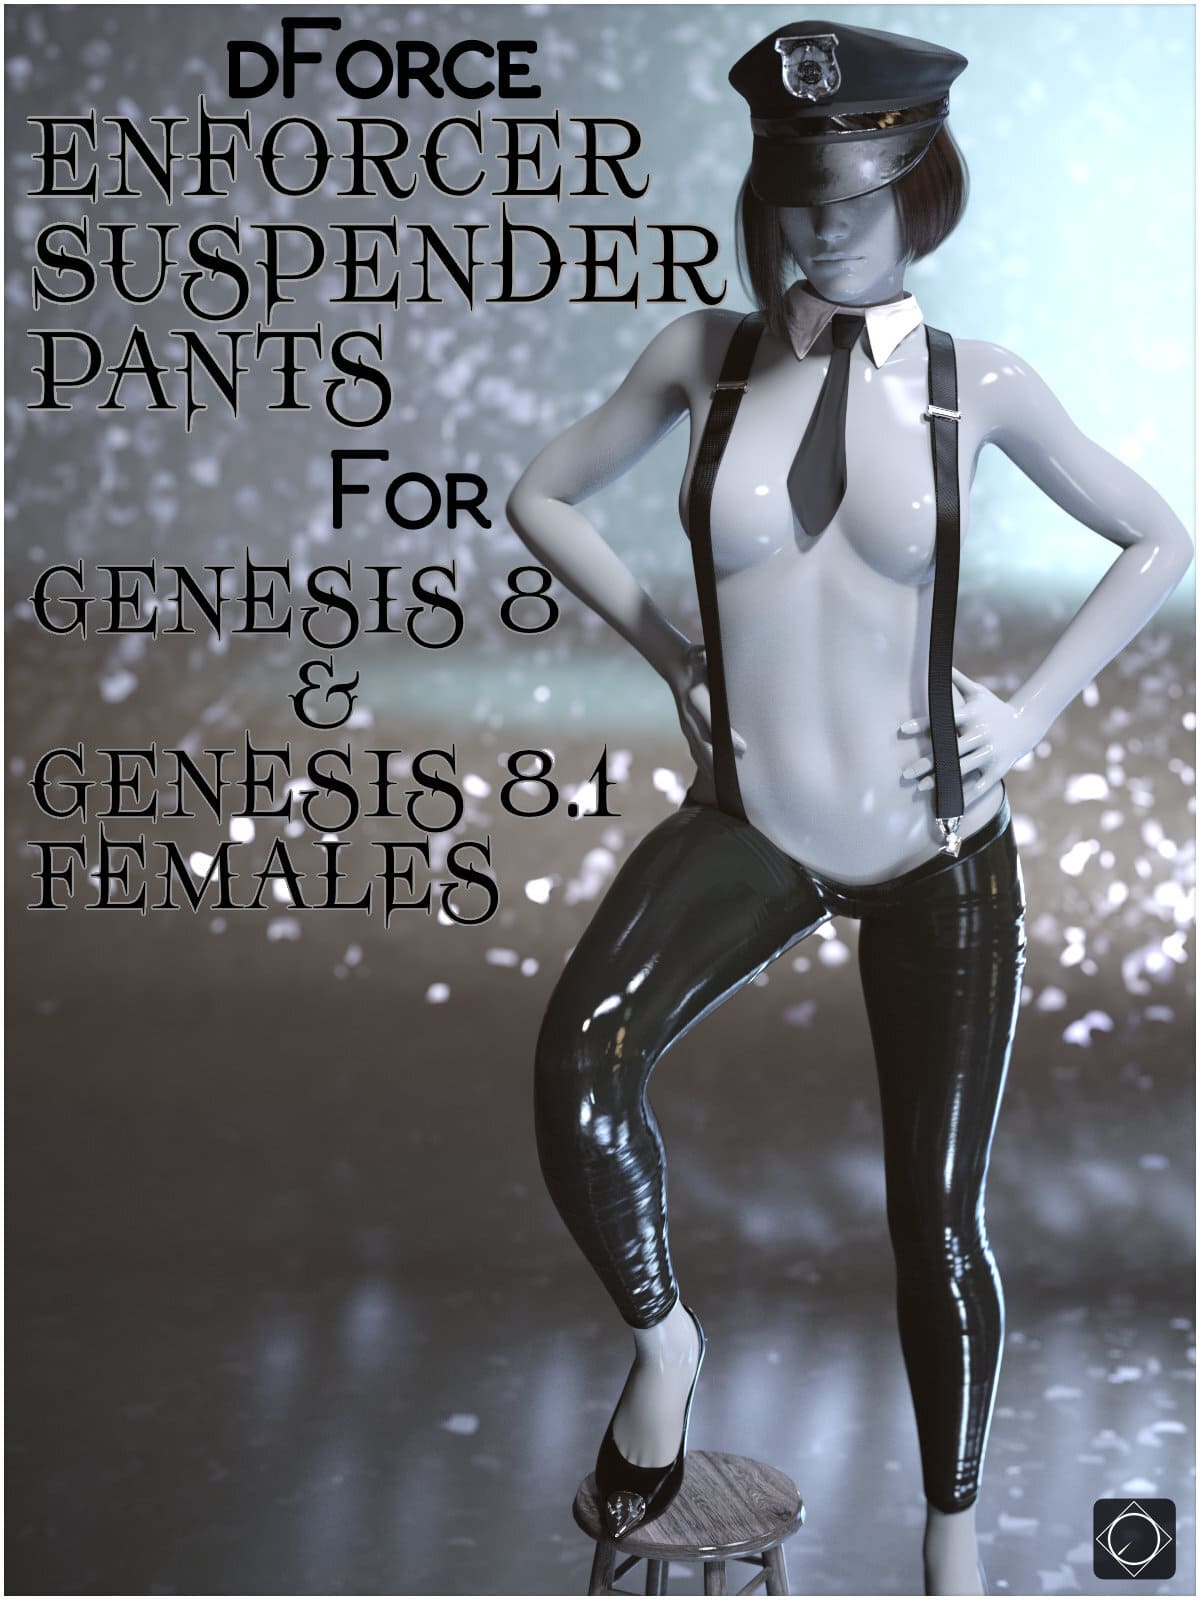 dForce Enforcer Suspender Pants for Genesis 8 and 8.1 Females_DAZ3D下载站